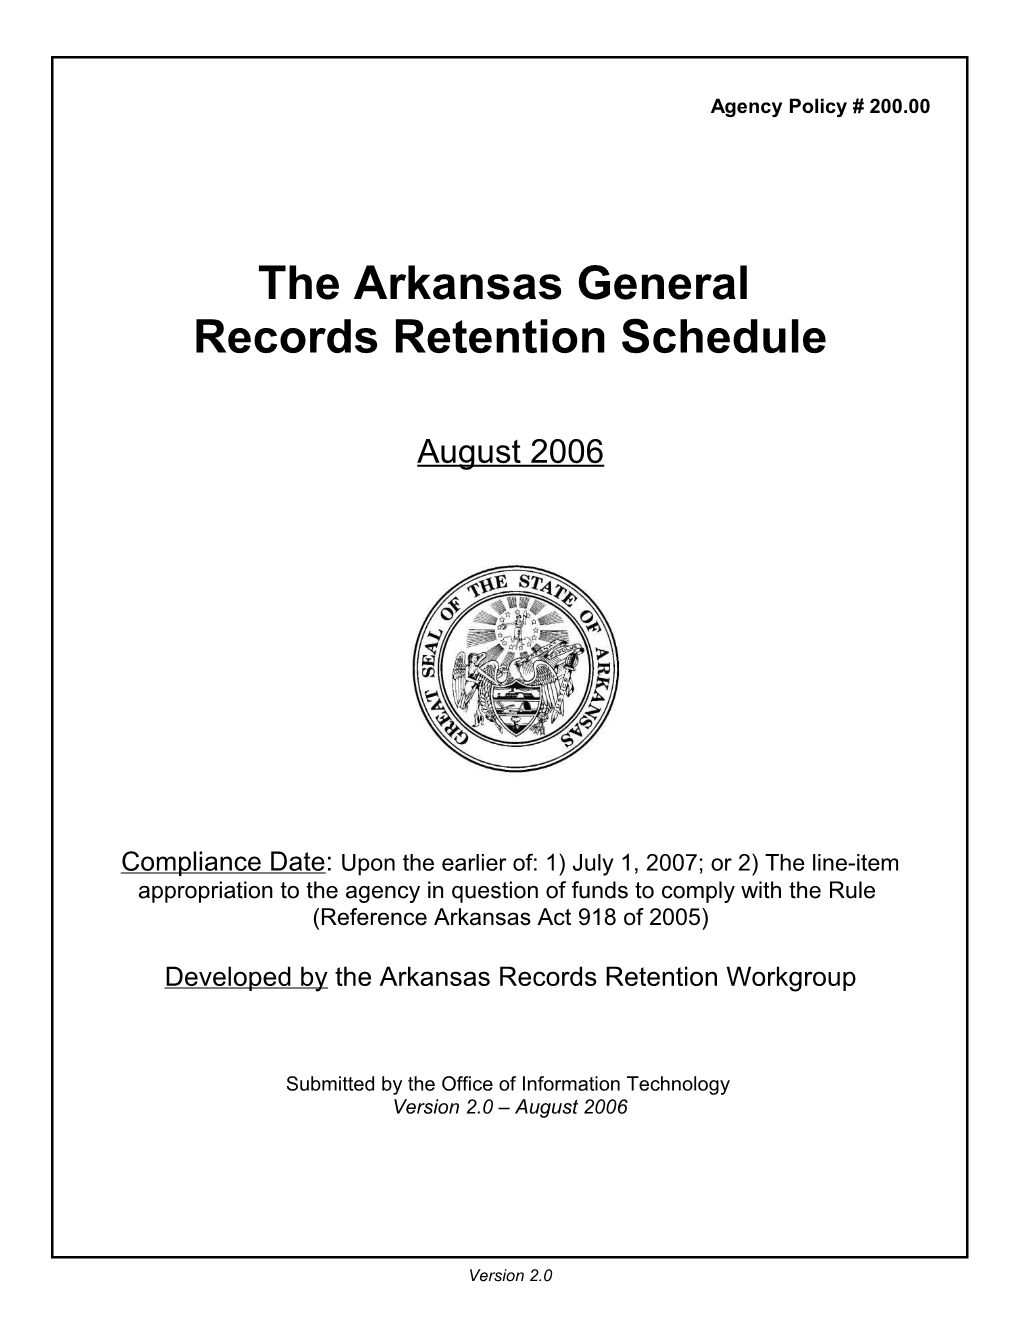 Arkansas Records Retention Schedule